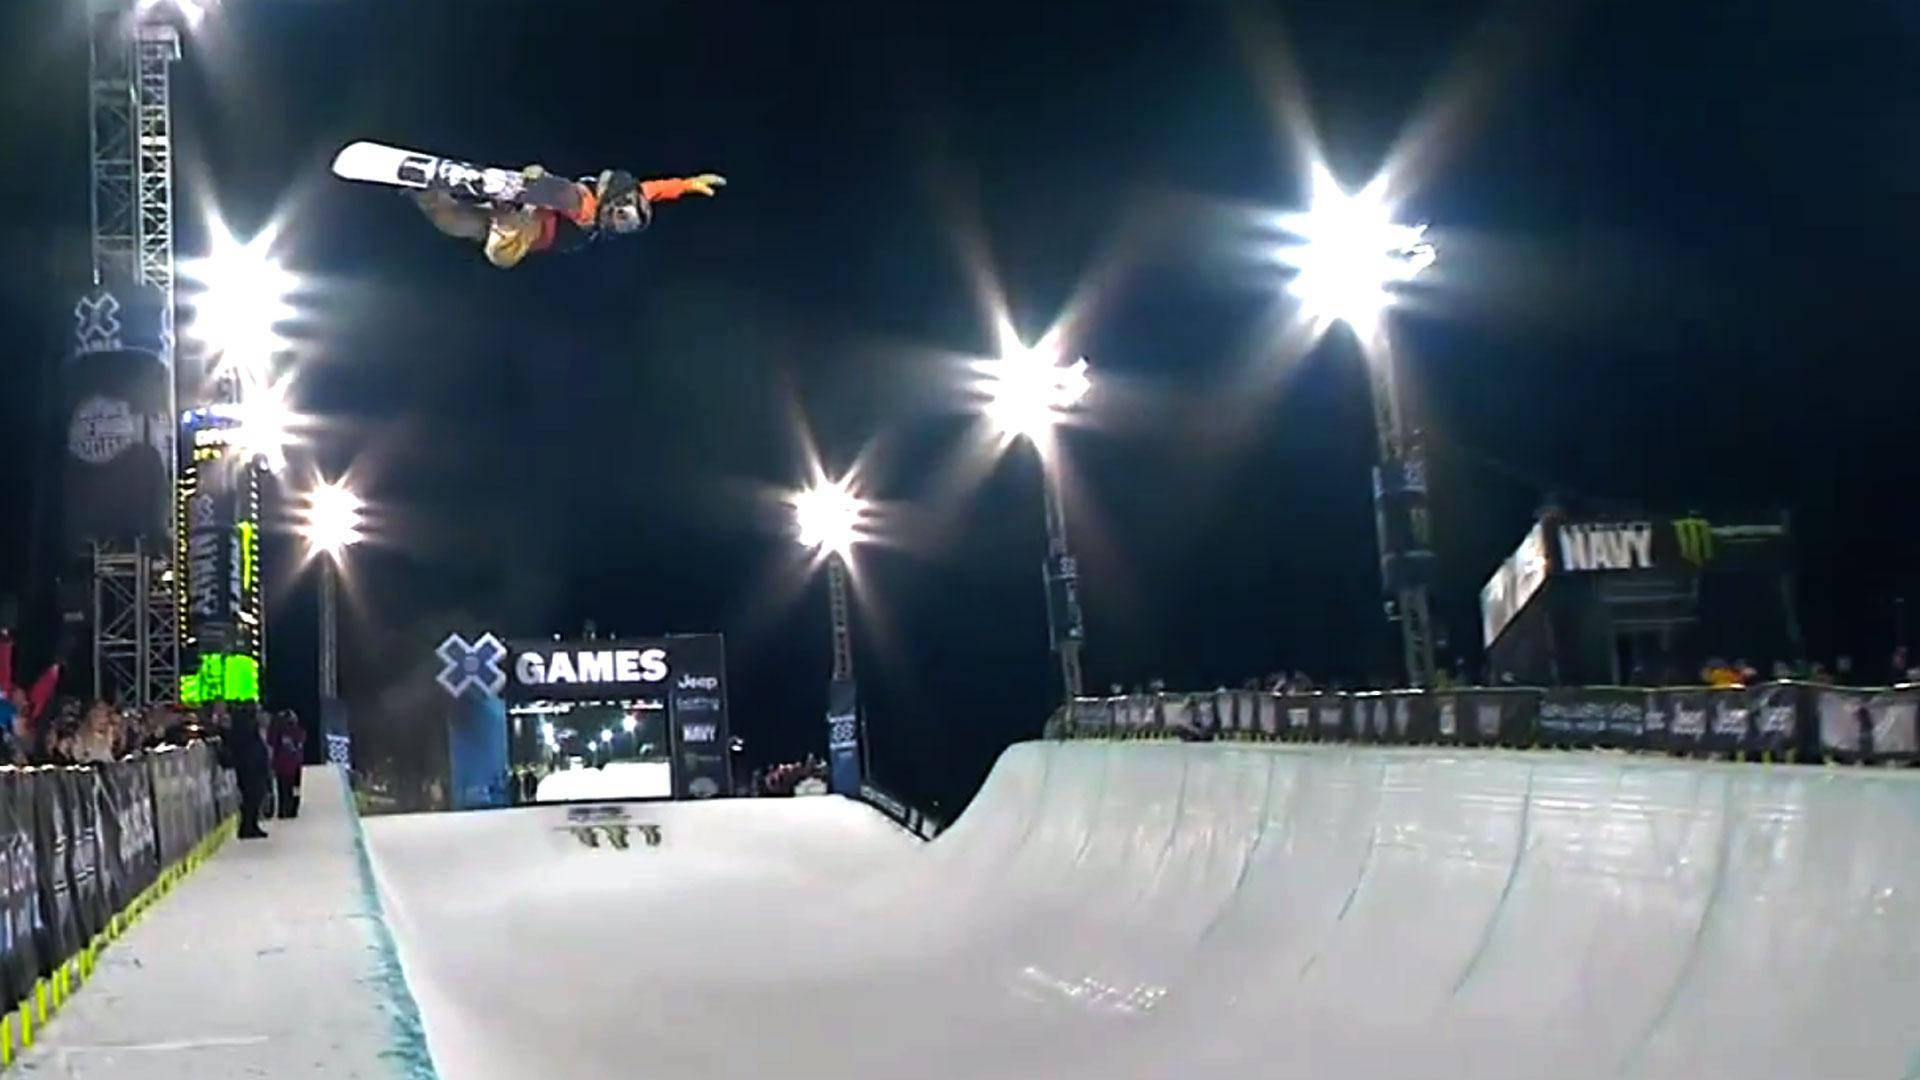 X Games Snowboard Stunt At Night Background